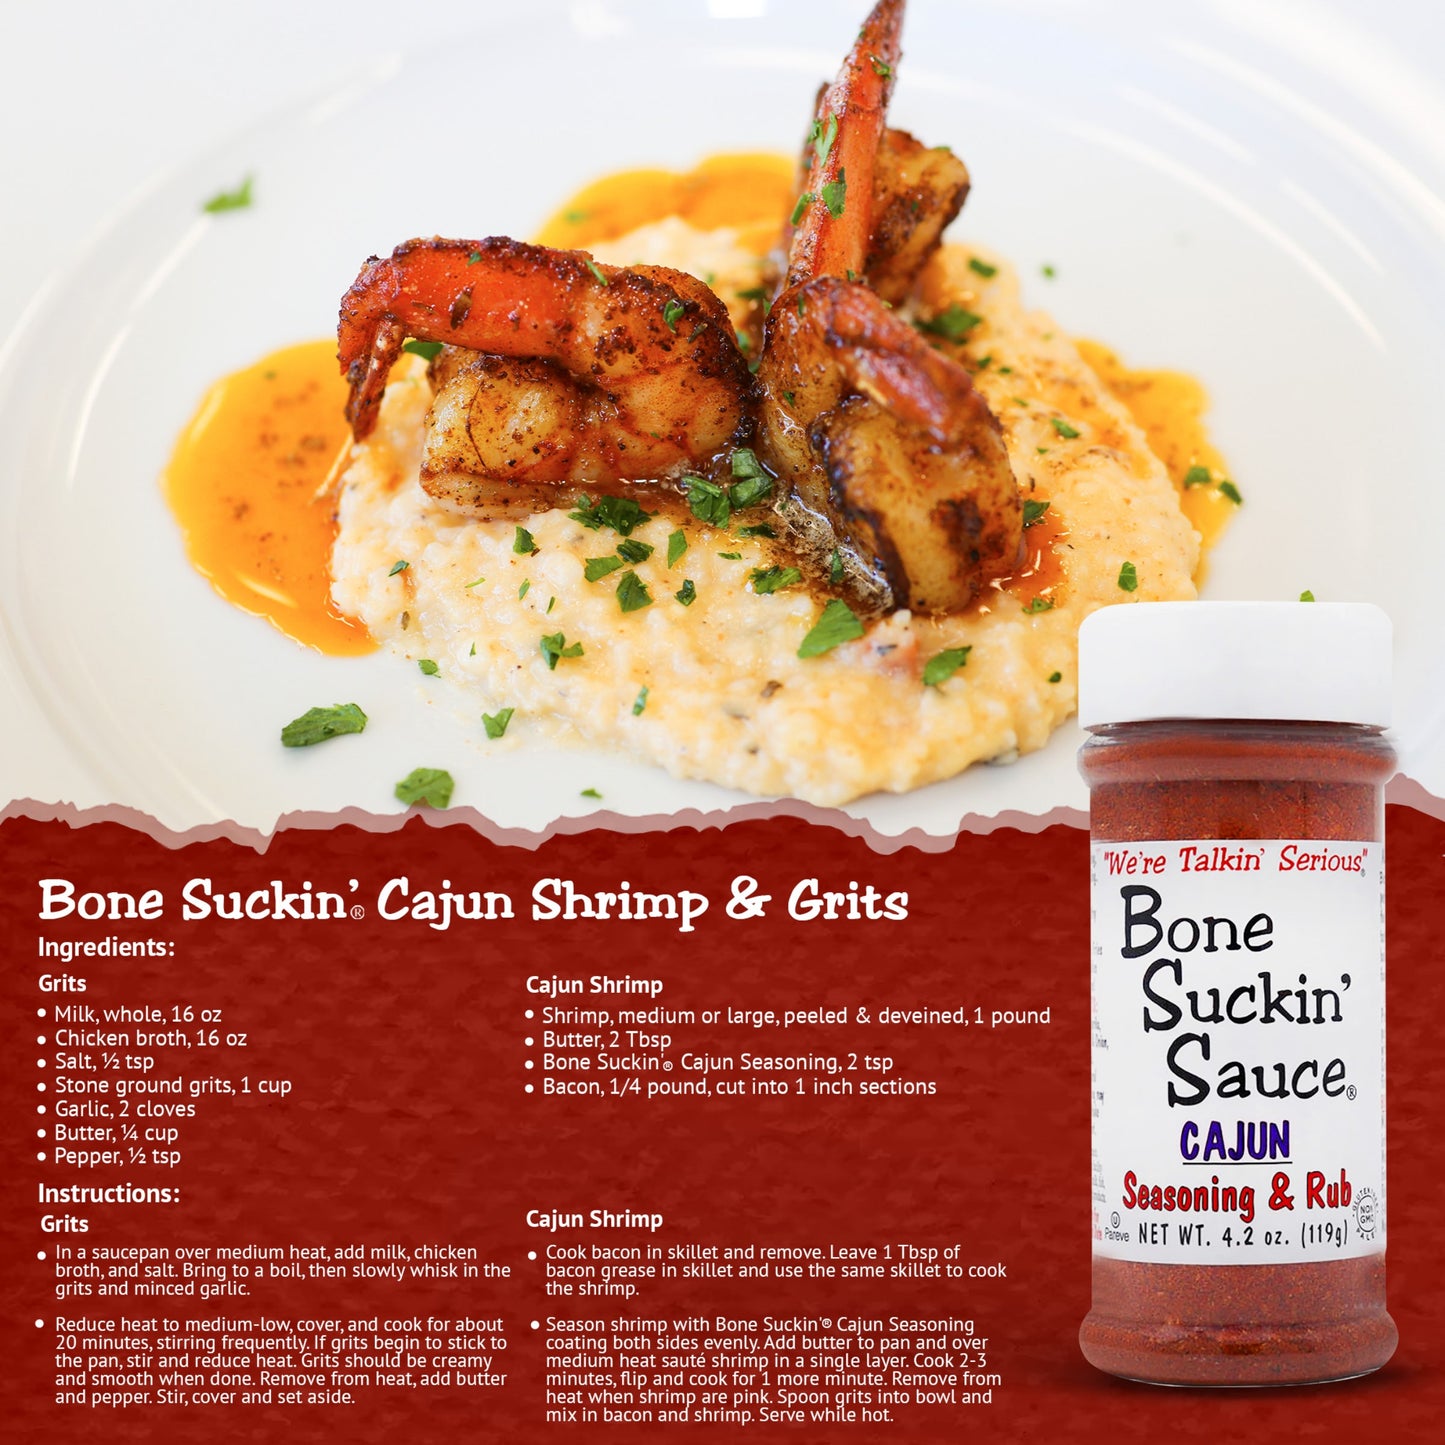 Bone Suckin' Cajun Shrimp & Grits Recipe. Find full recipe on recipes.bonesuckin.com